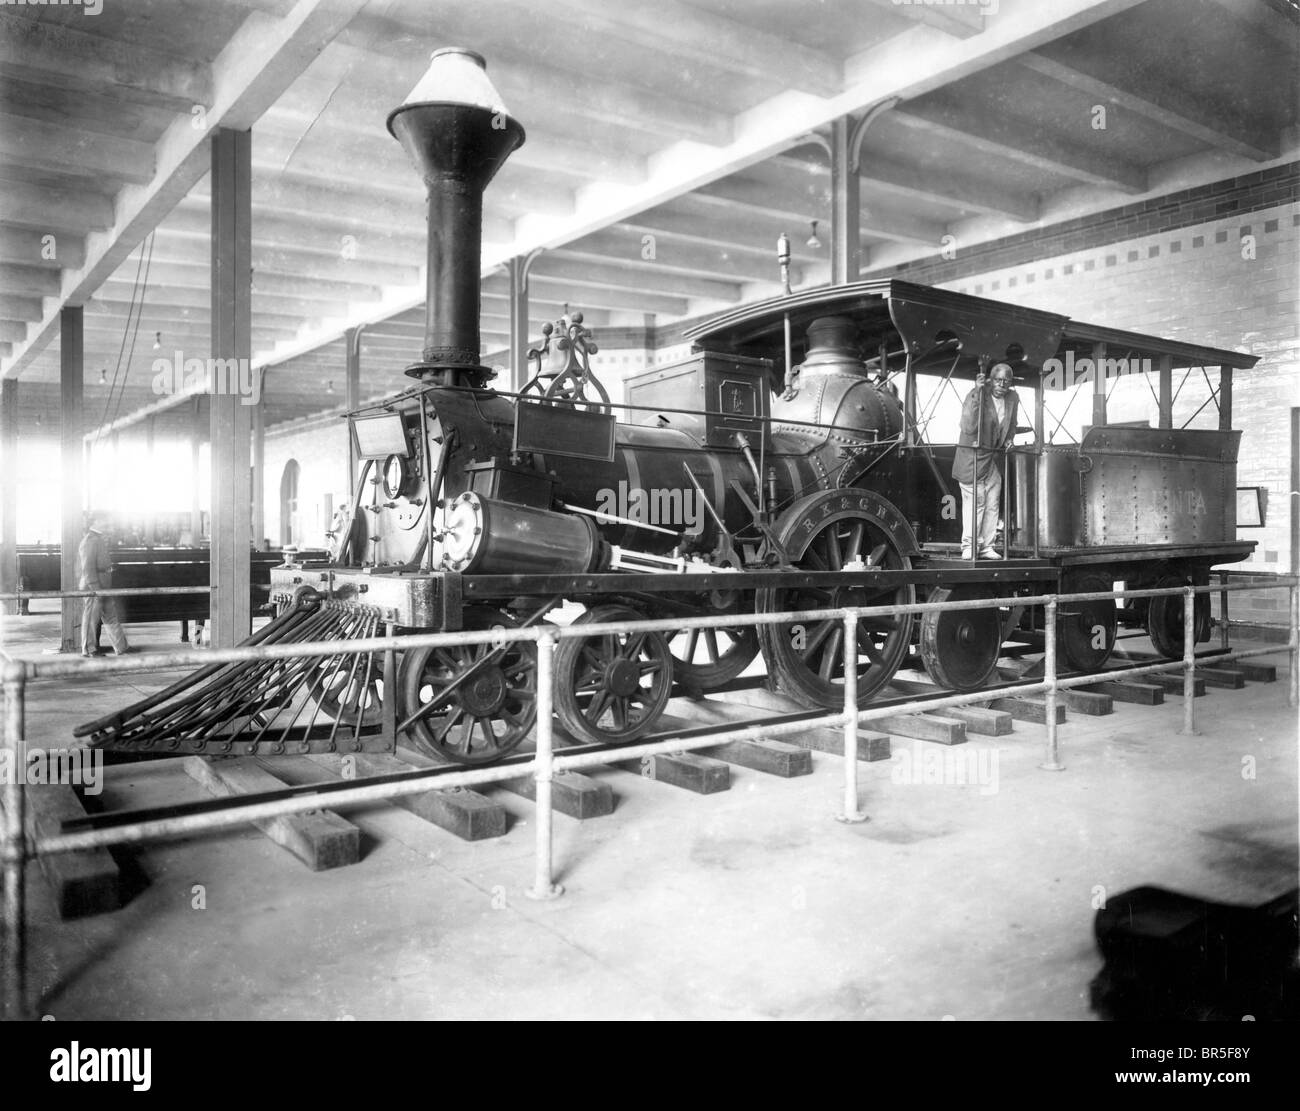 Fotografía Histórica, motor a vapor, alrededor de 1924 Foto de stock